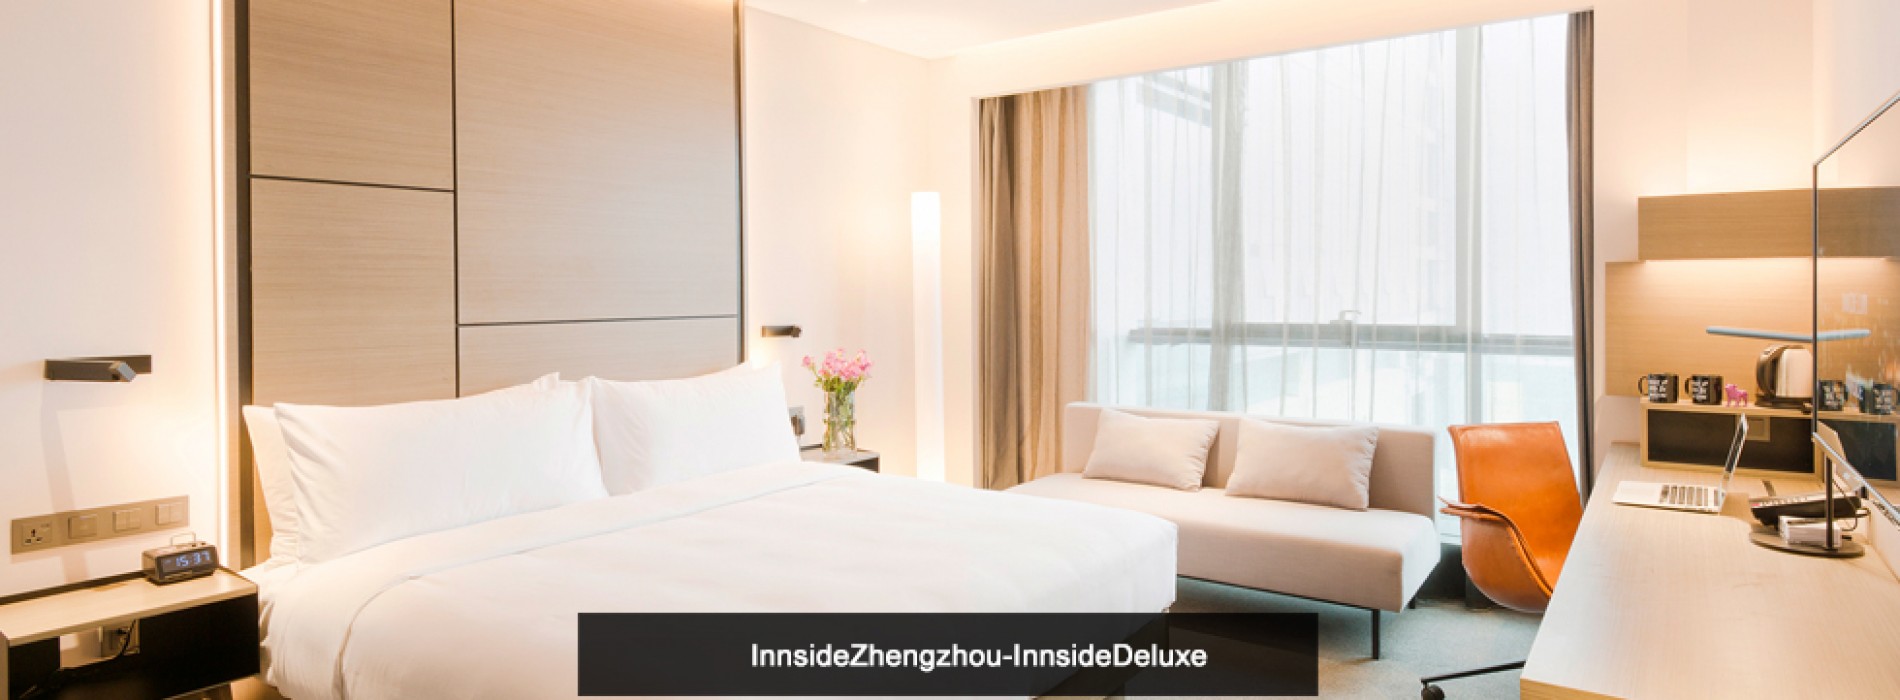 INNSIDE by Meliá hotel group debuts in China with INNSIDE Zhengzhou